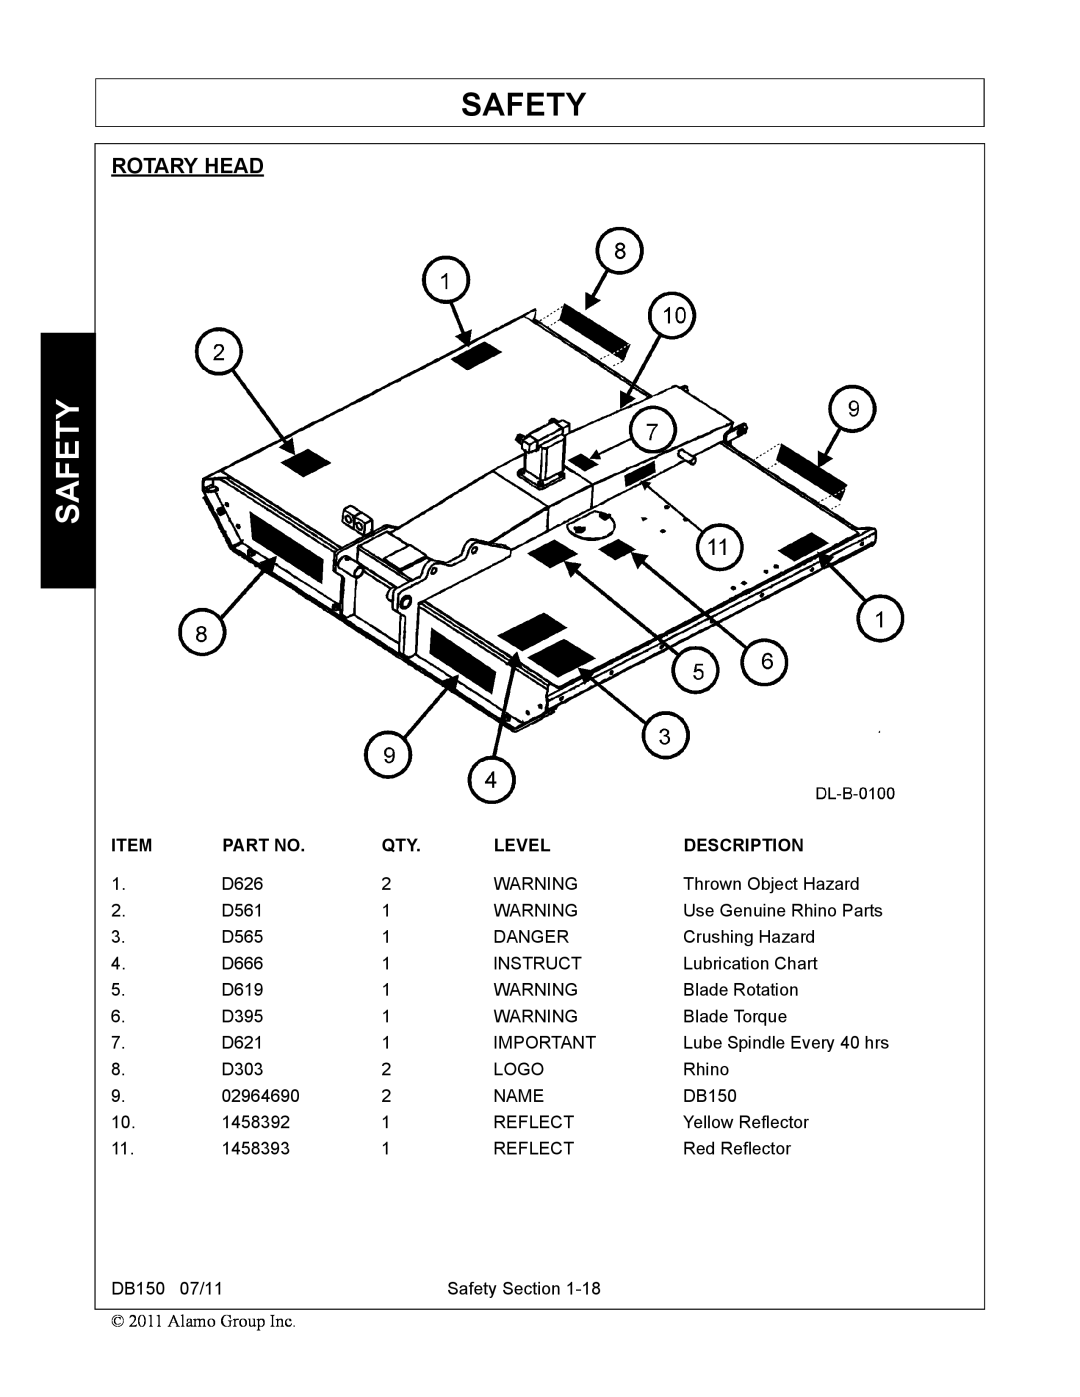 Rhino Mounts DB150 manual Safety, Rotary Head, Level, Description 